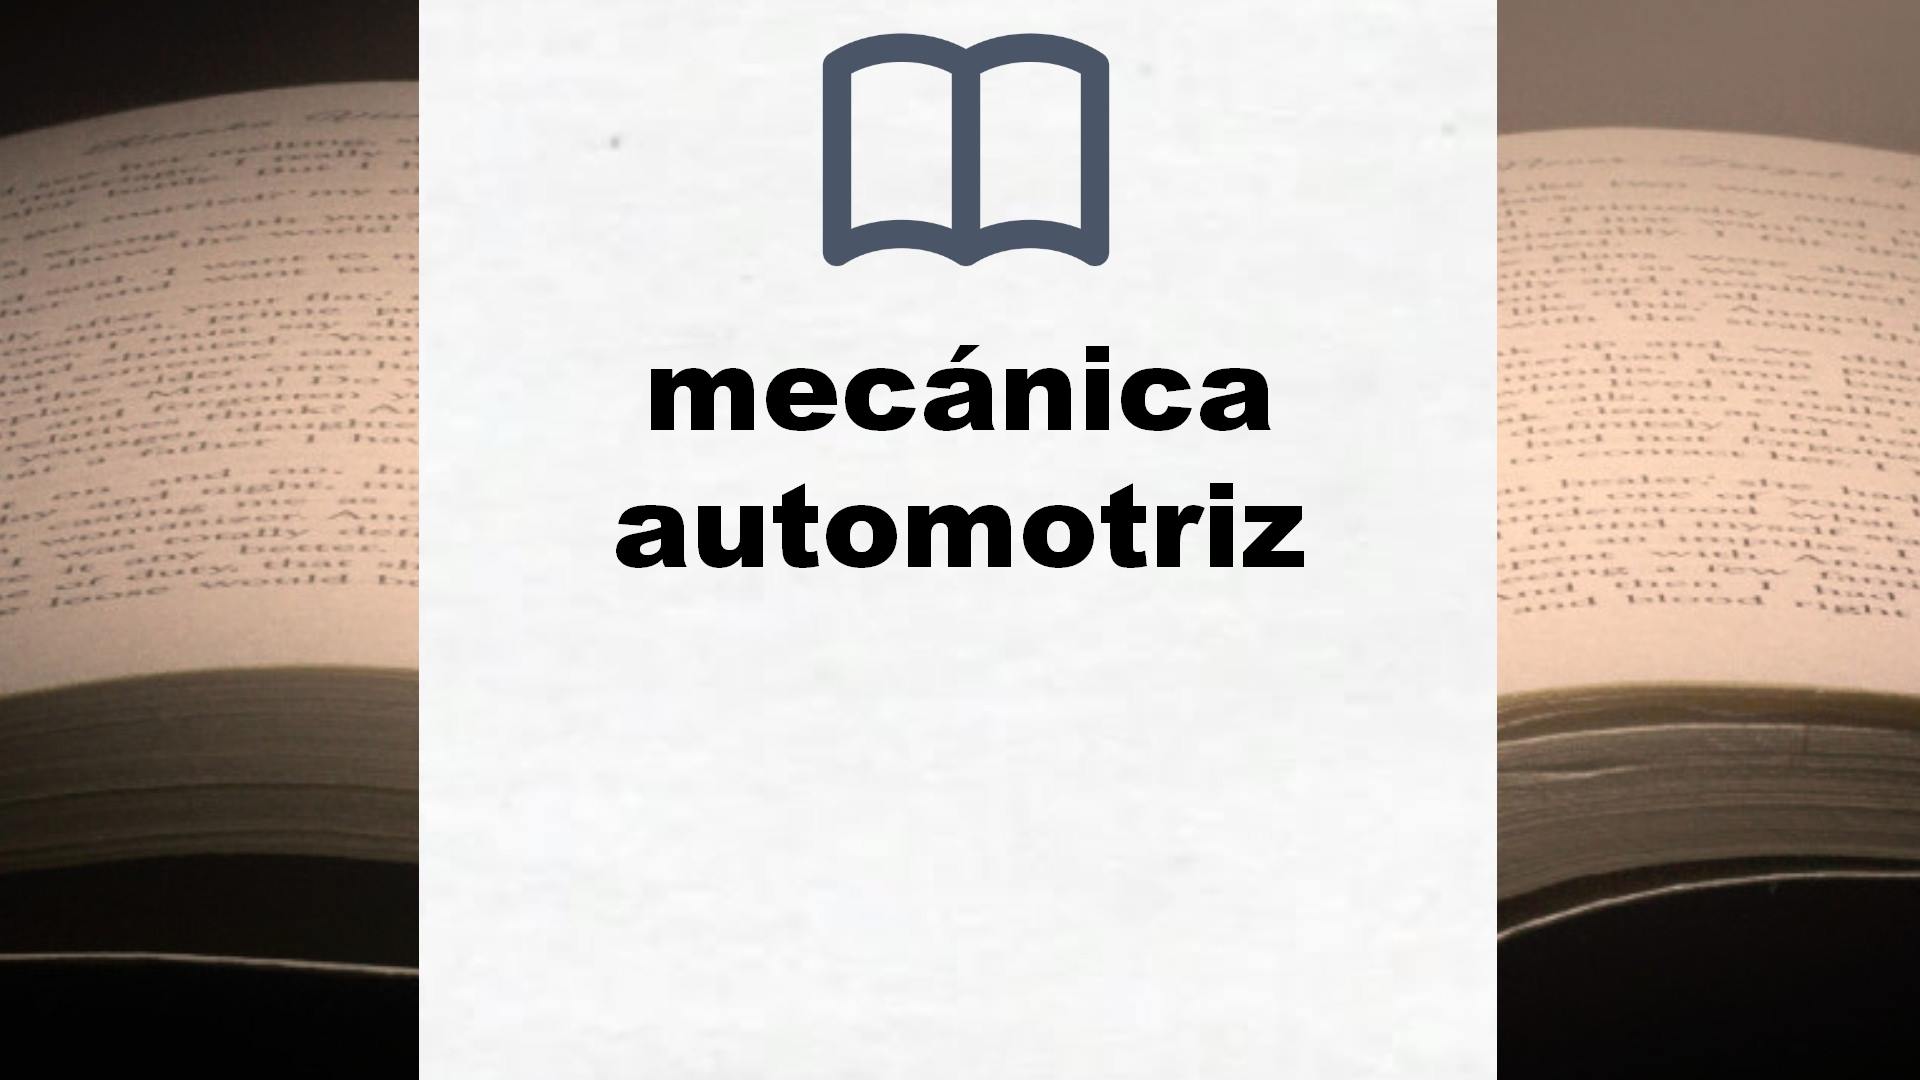 Libros sobre mecánica automotriz